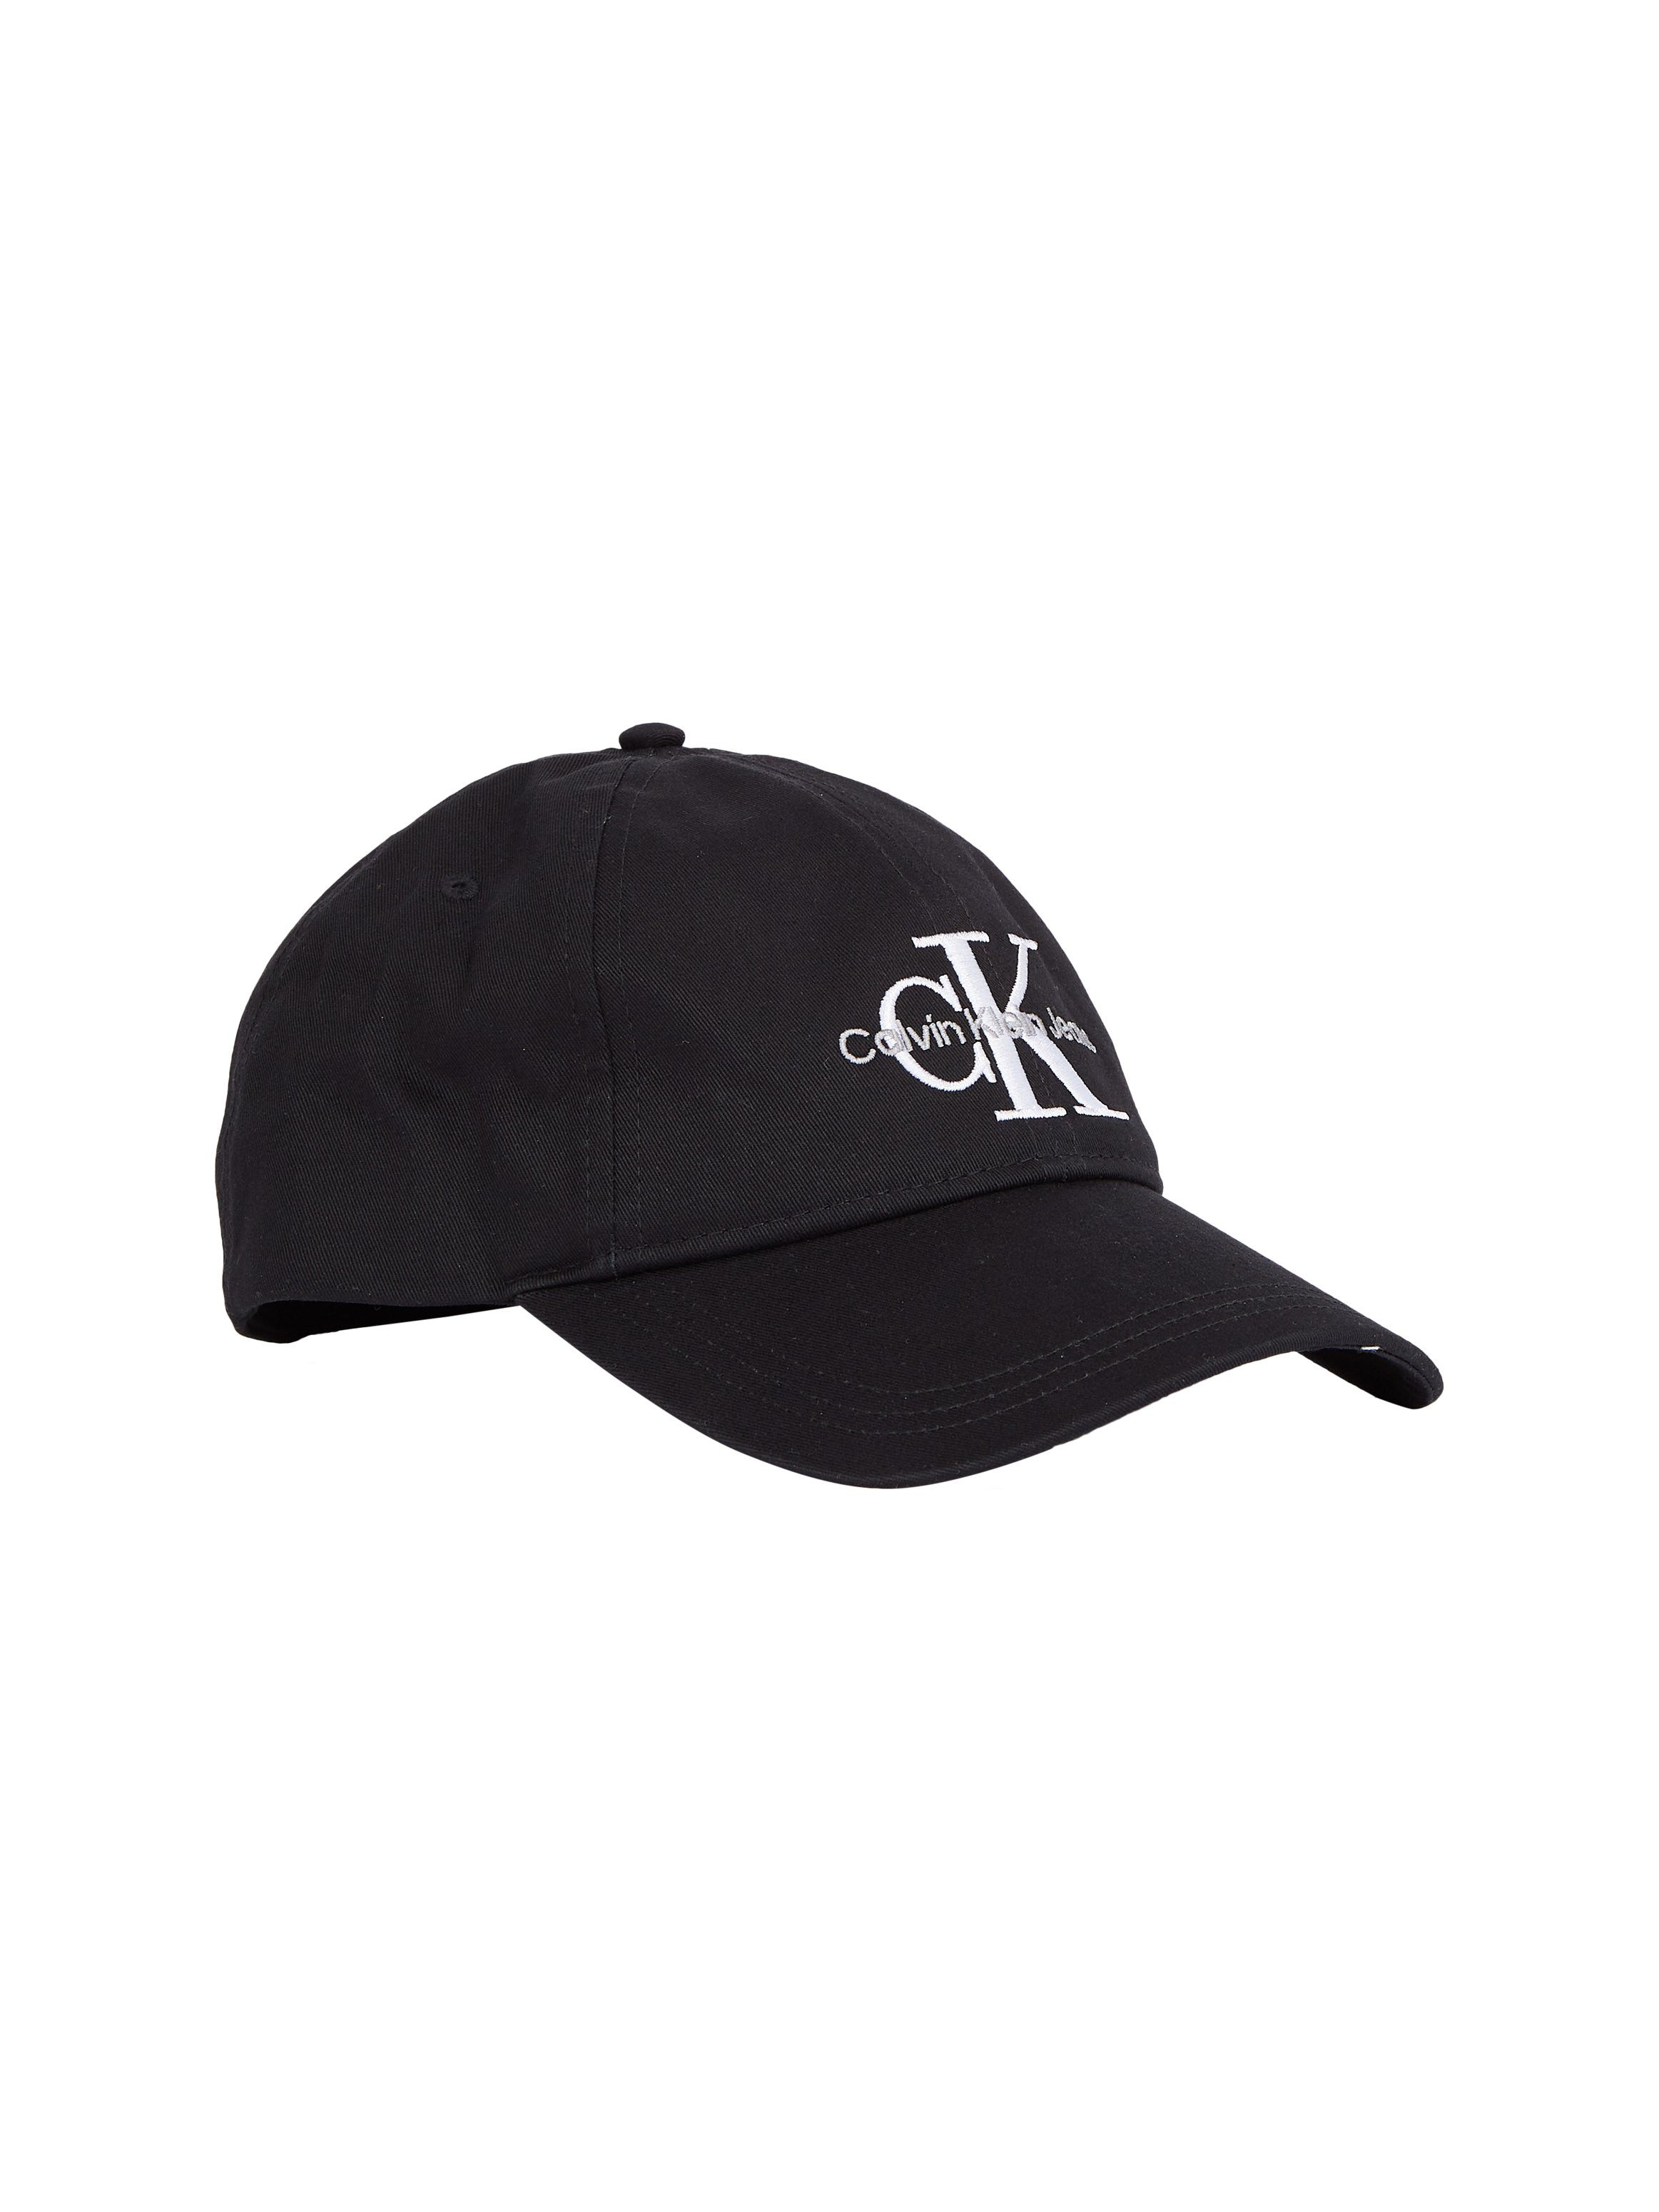 Black Cap Klein Calvin MONOGRAM Jeans Baseball CAP